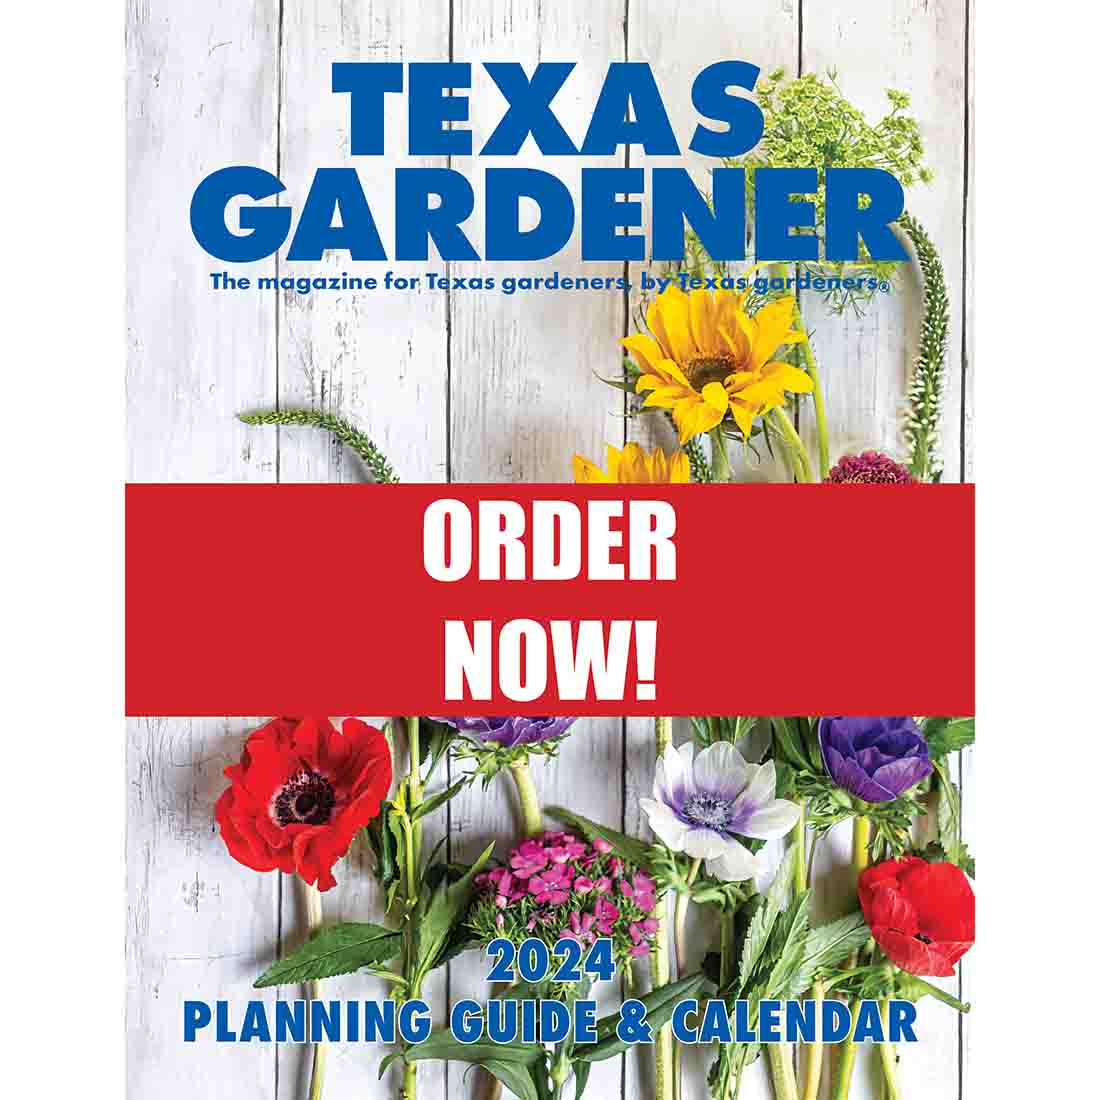 https://www.texasgardener.com/wp-content/uploads/2021/06/2024-Planning-Guide-with-Banner-sq1.jpg